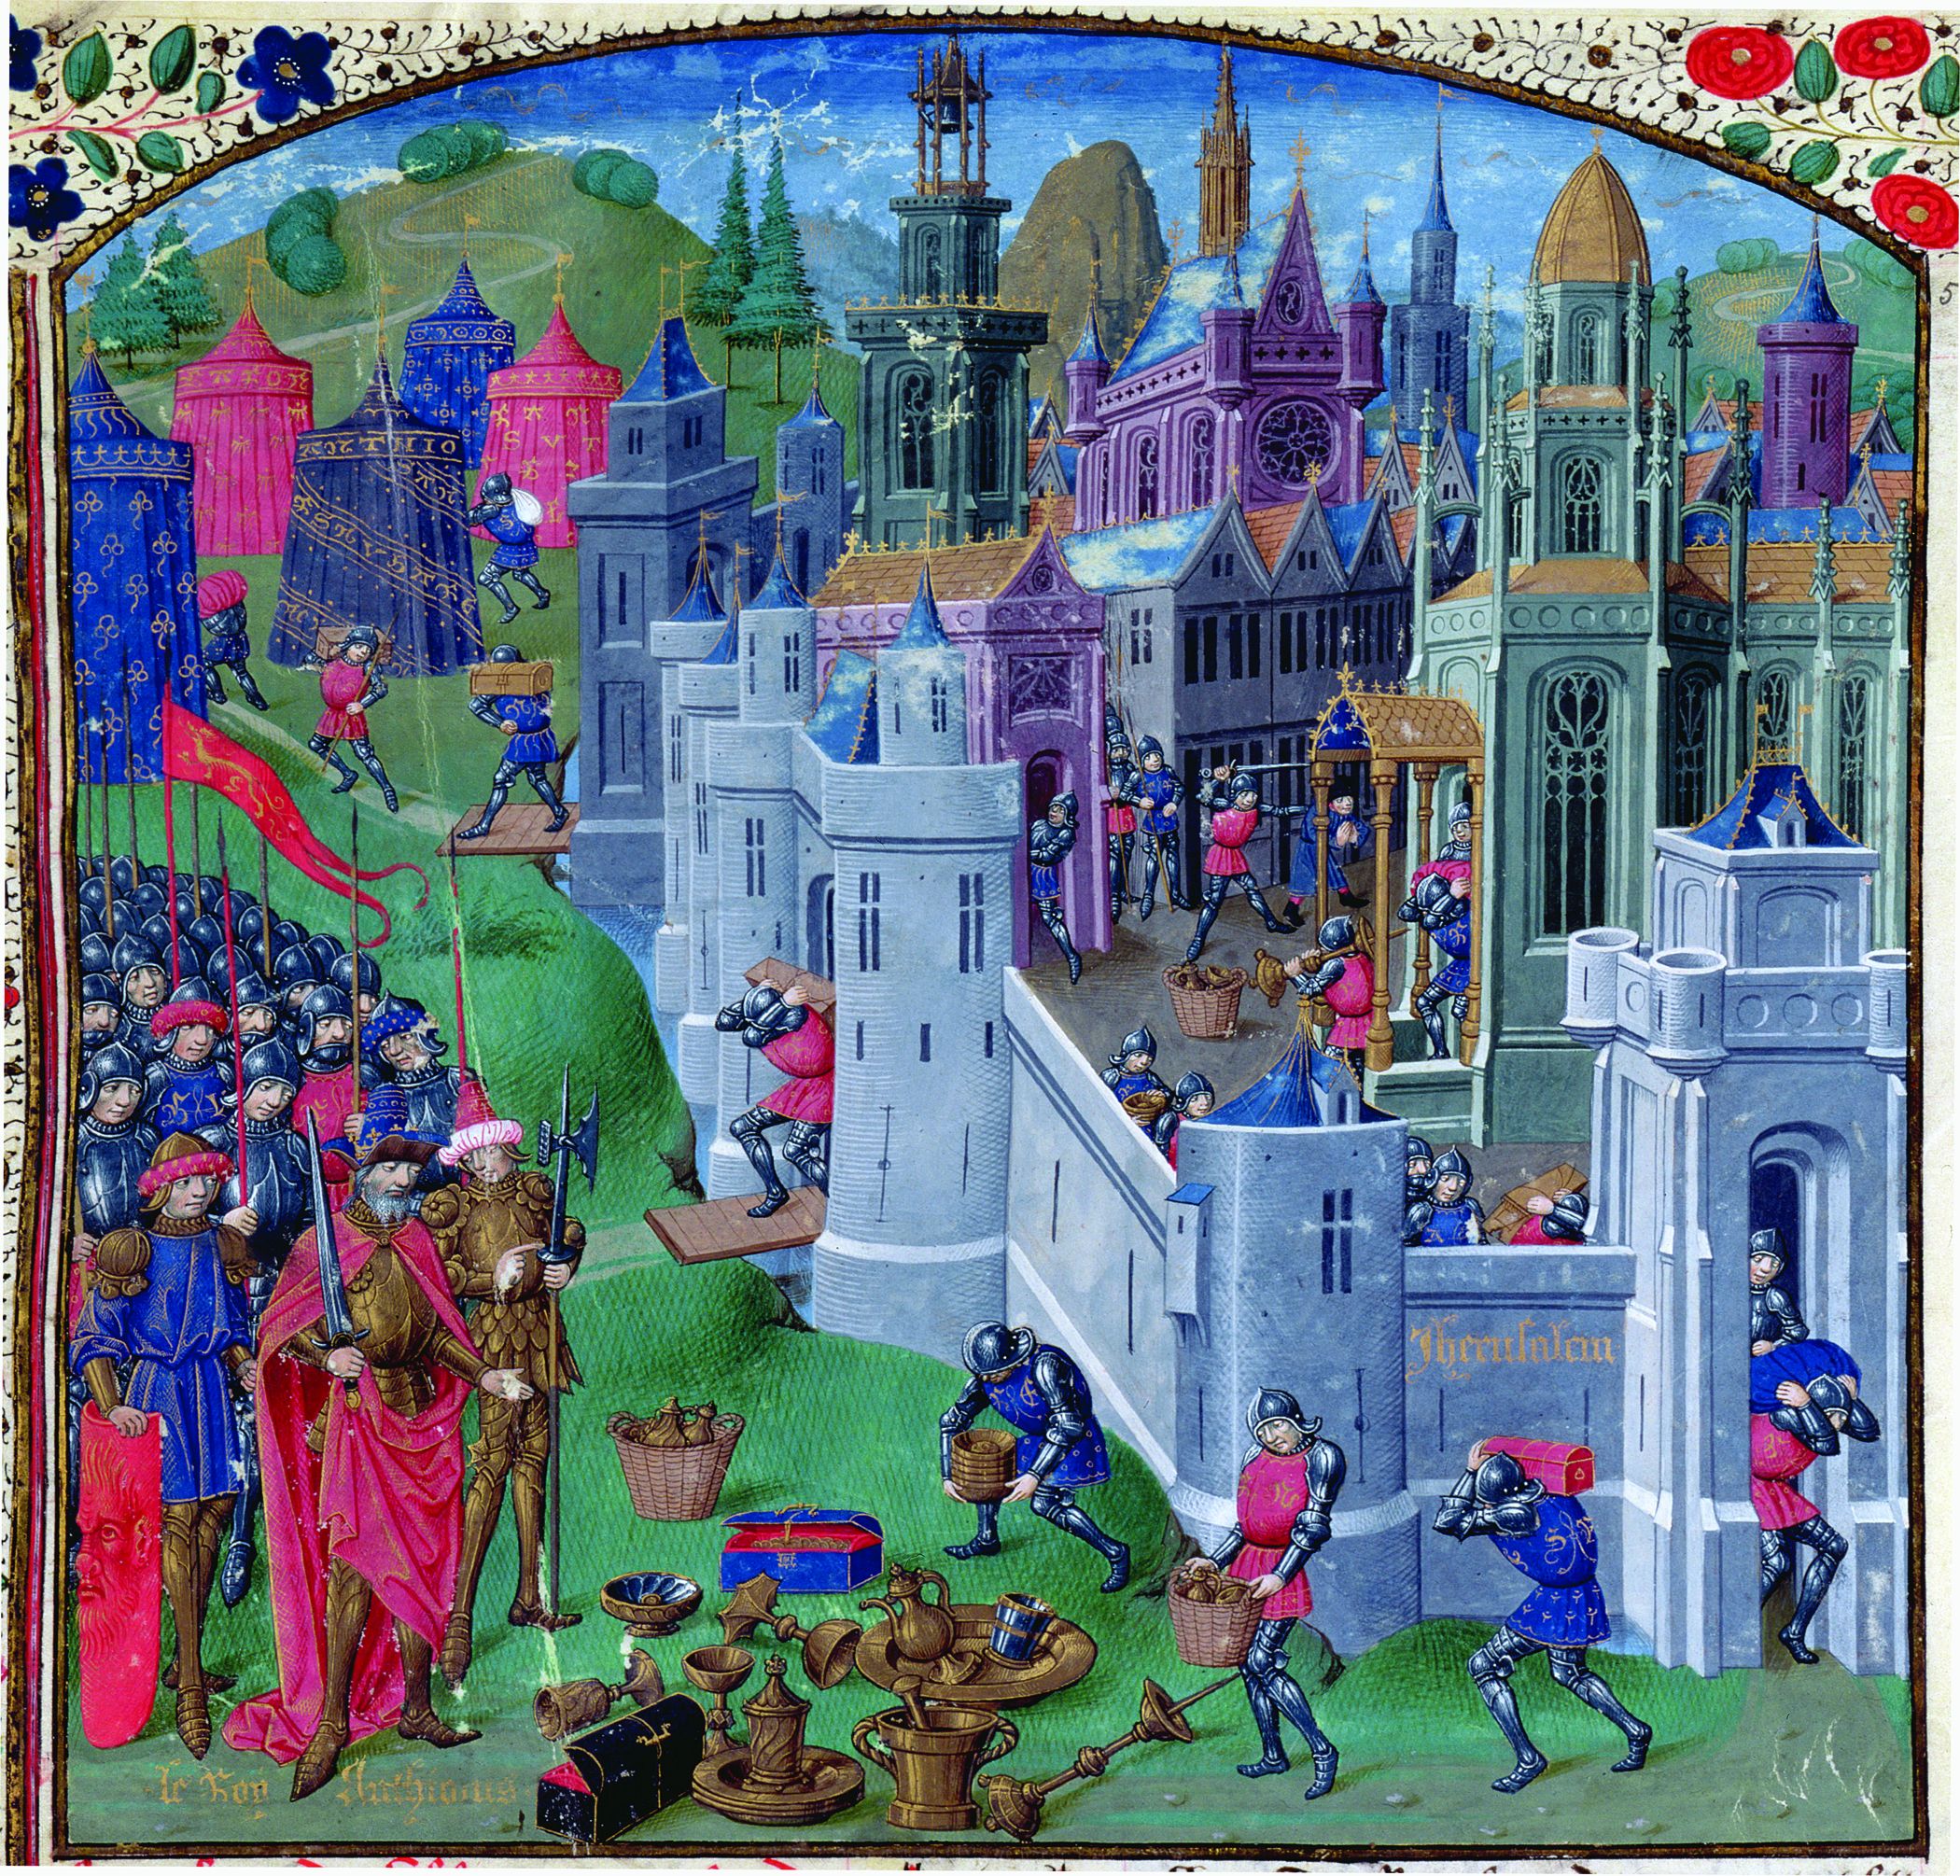 Syrian troops under King Antiochus IV plunder Jerusalem in this 15th-century illustration.